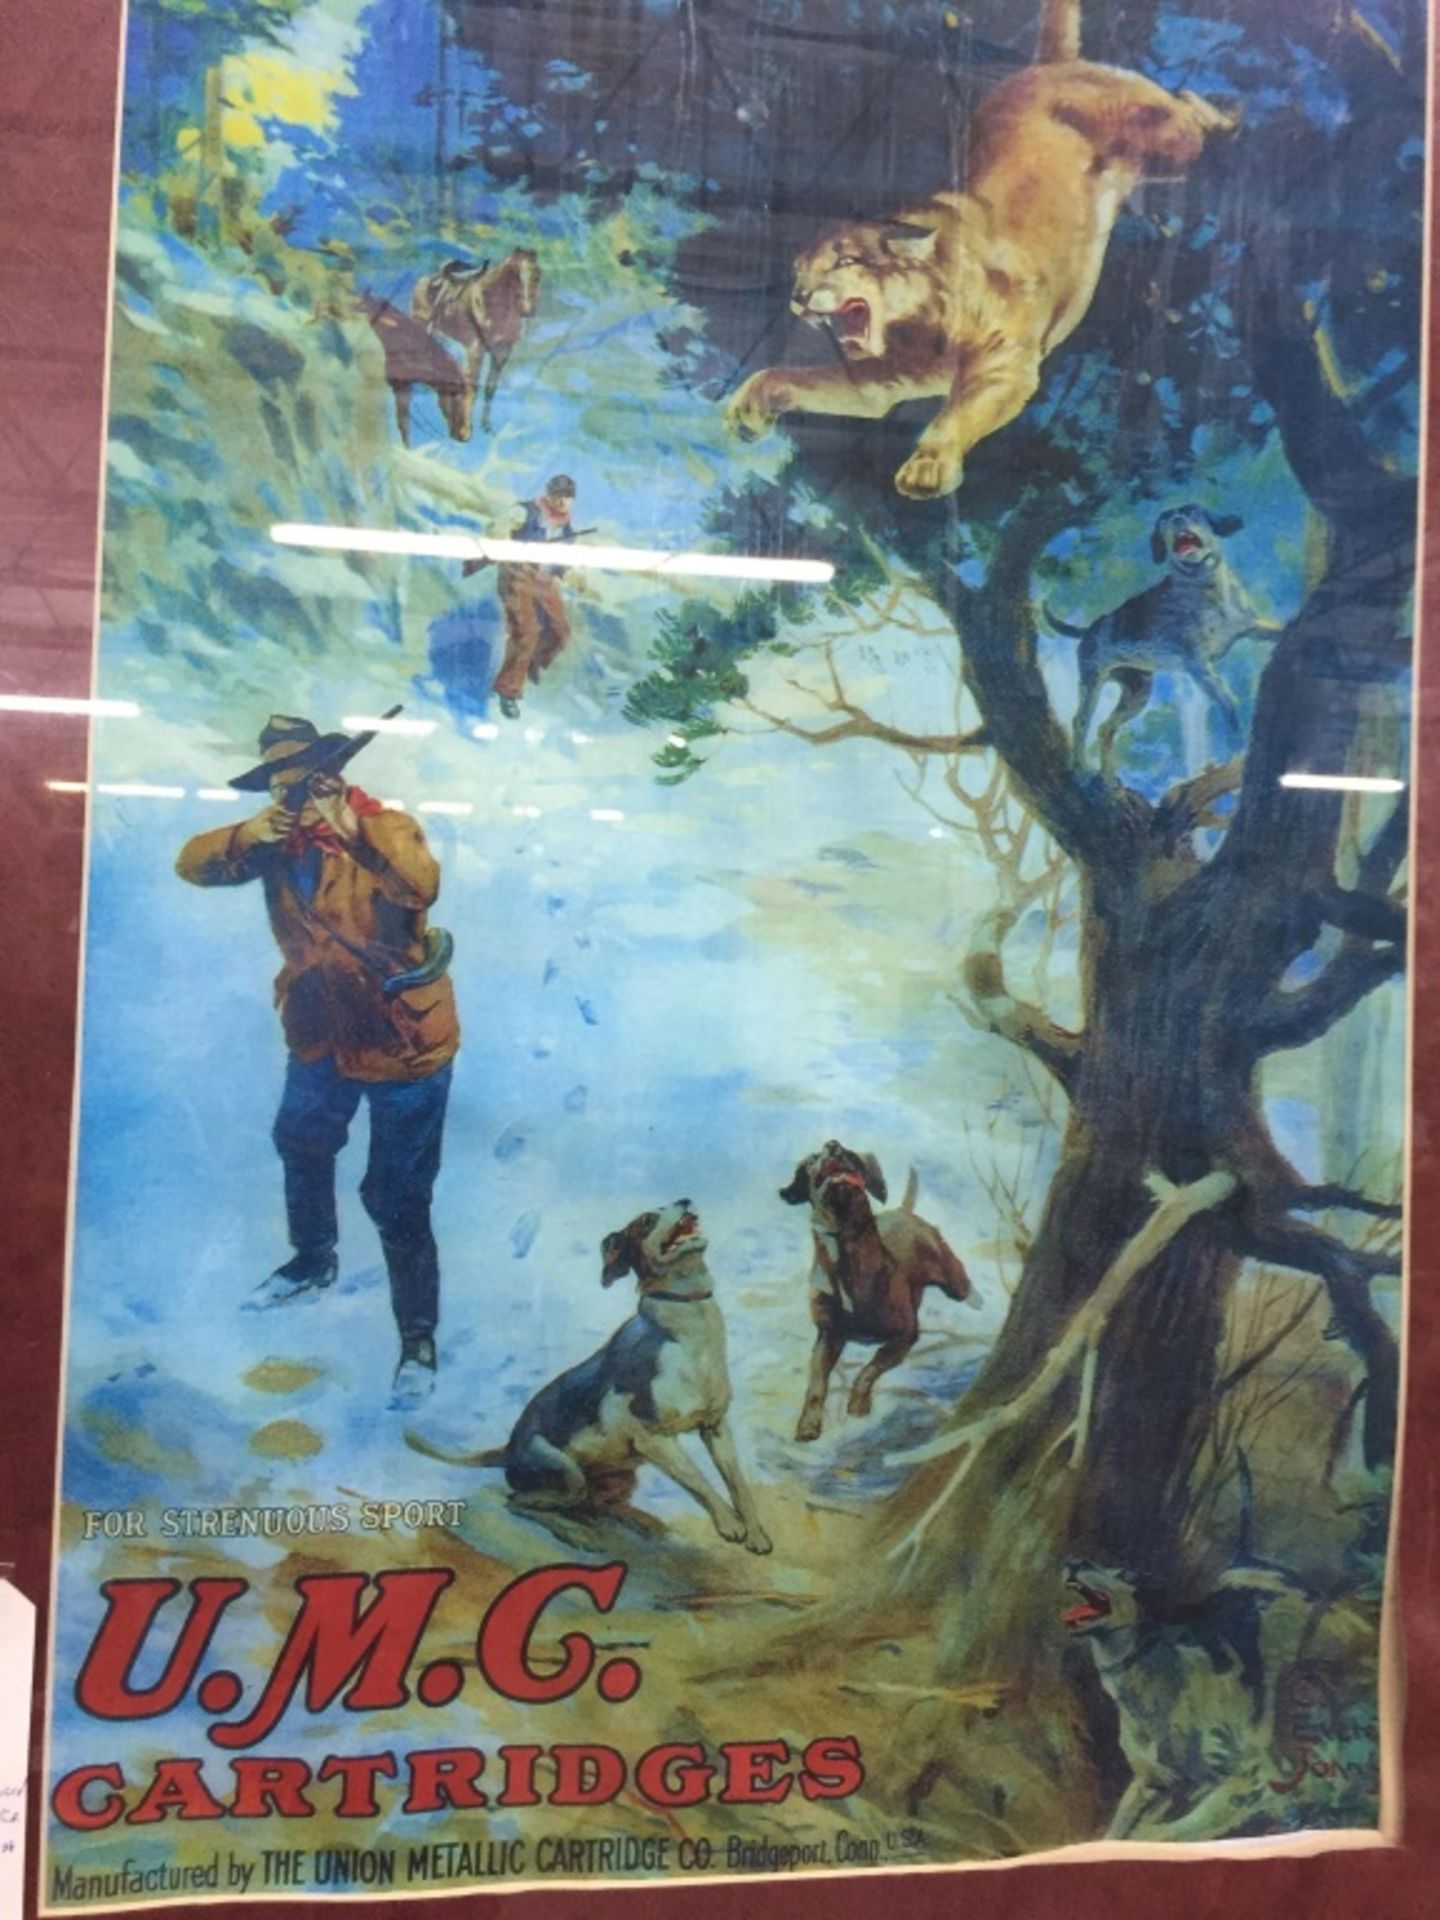 U.M.C Cartridges Poster - Image 4 of 7